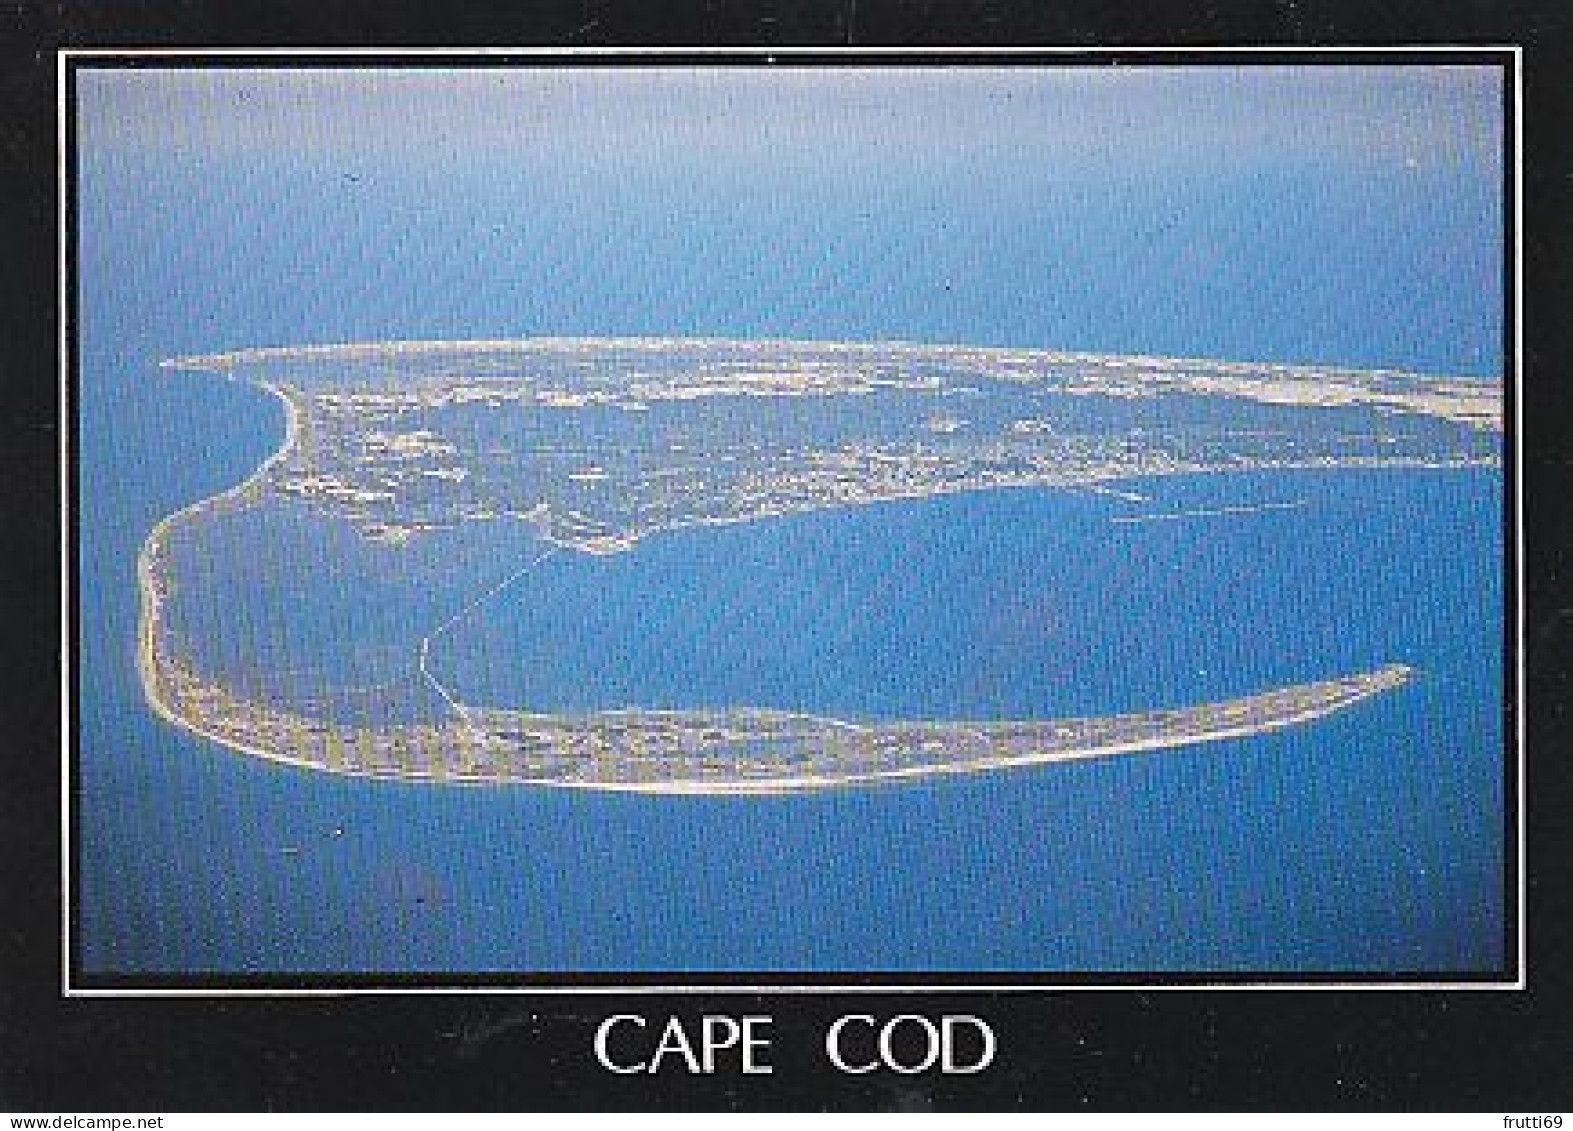 AK 174401 USA - Massachusetts - Cape Cod - Cape Cod